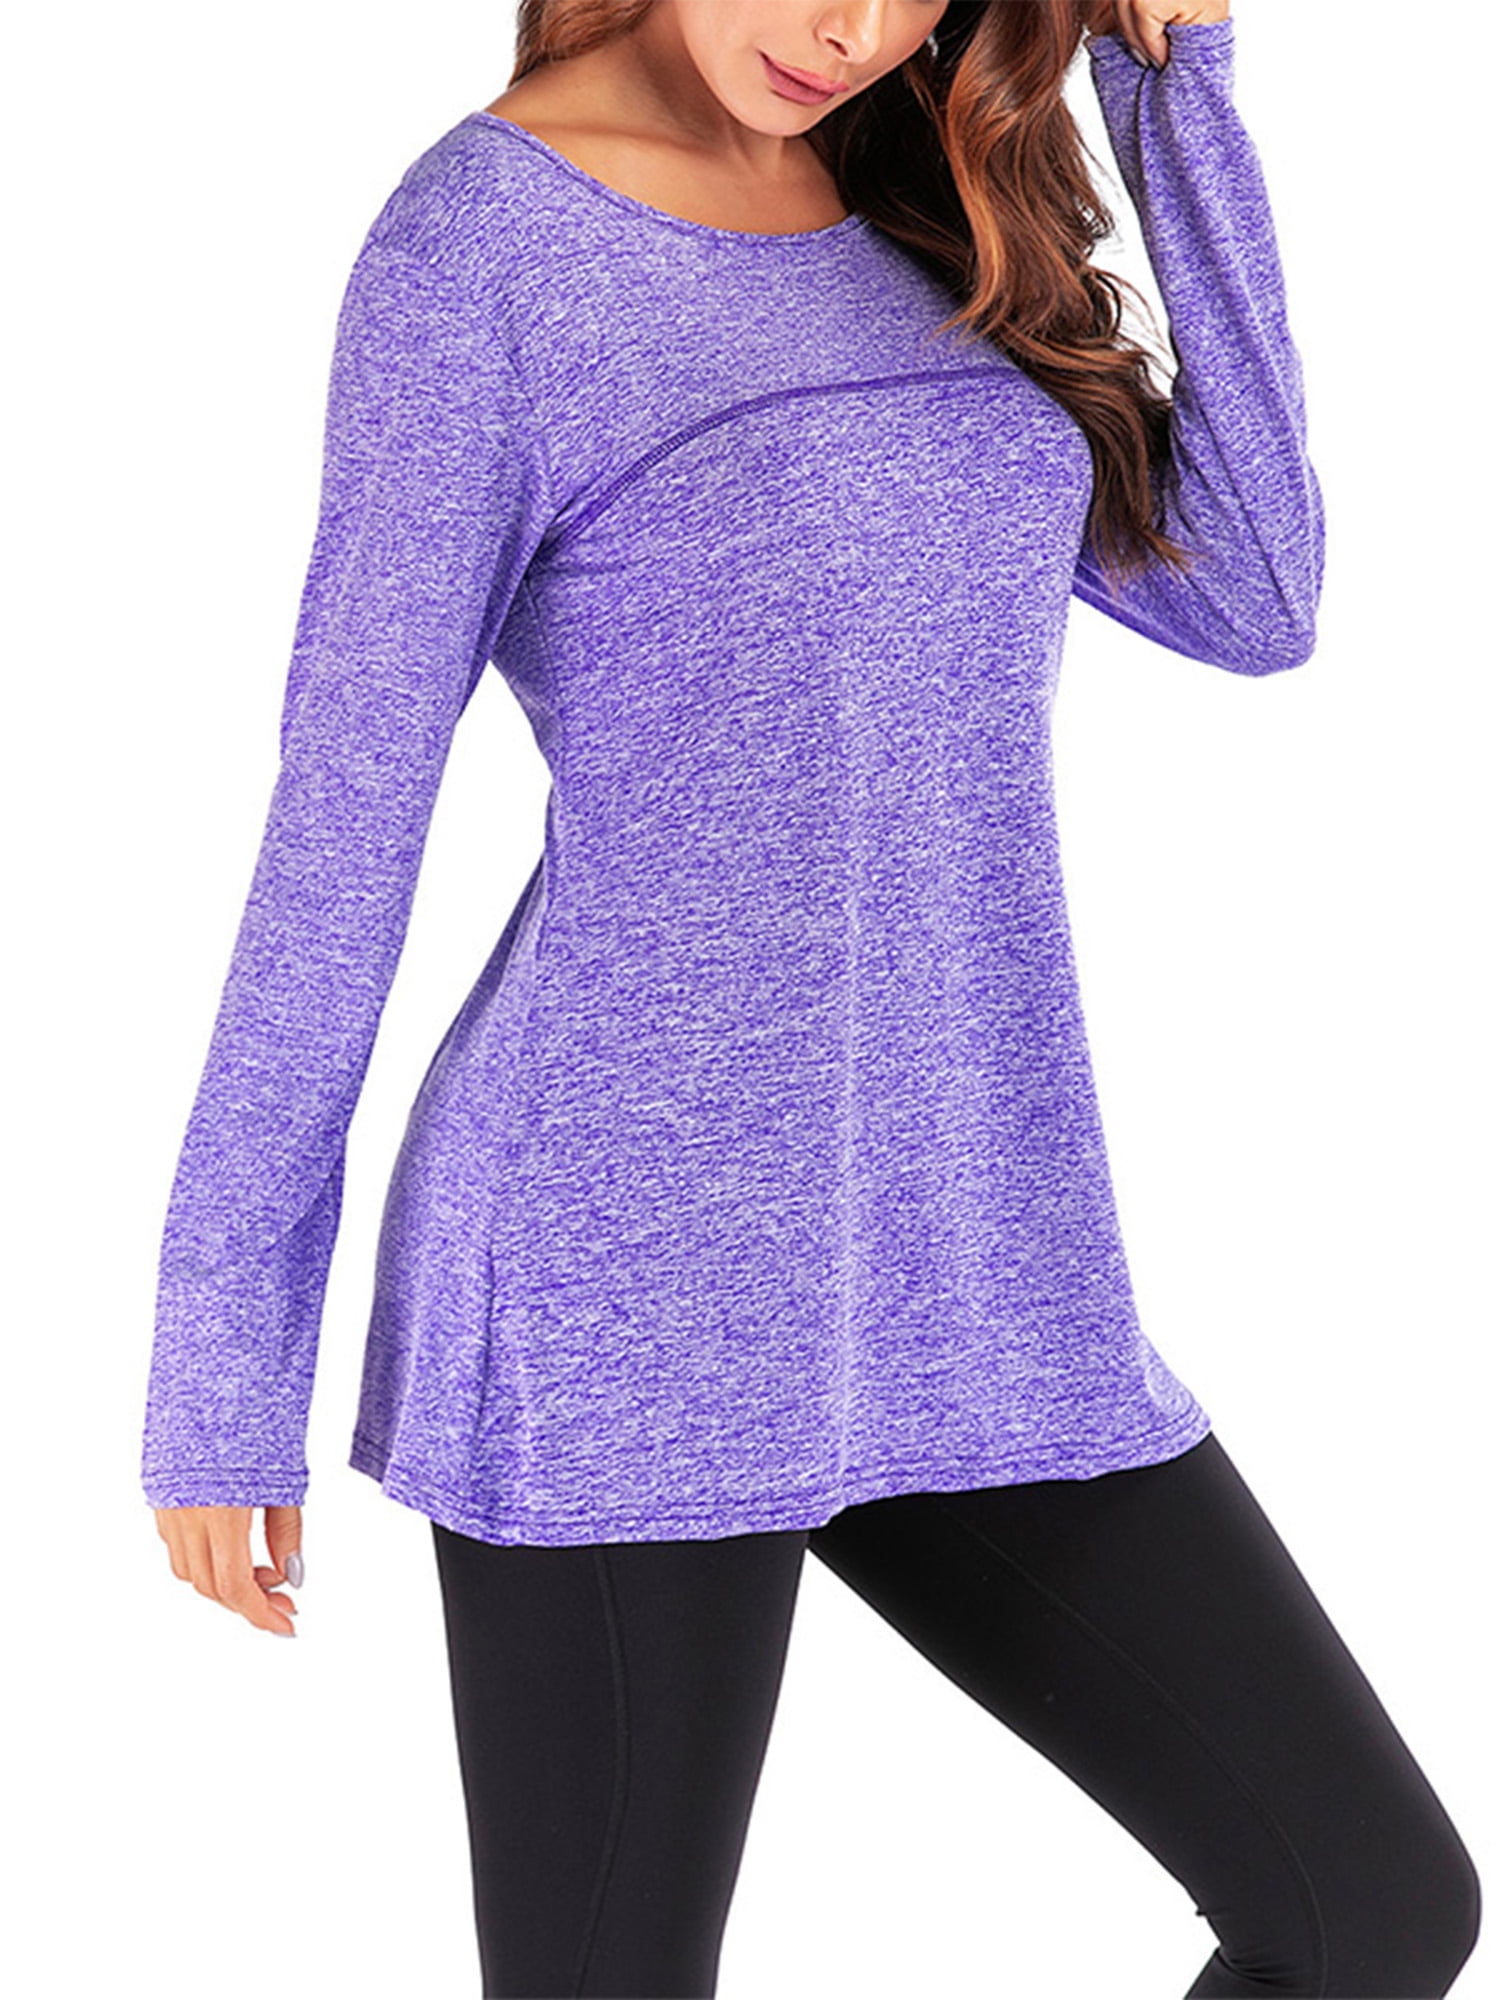 Hibelle Womens Long Sleeve Activewear Yoga Running Workout T-Shirt Tops